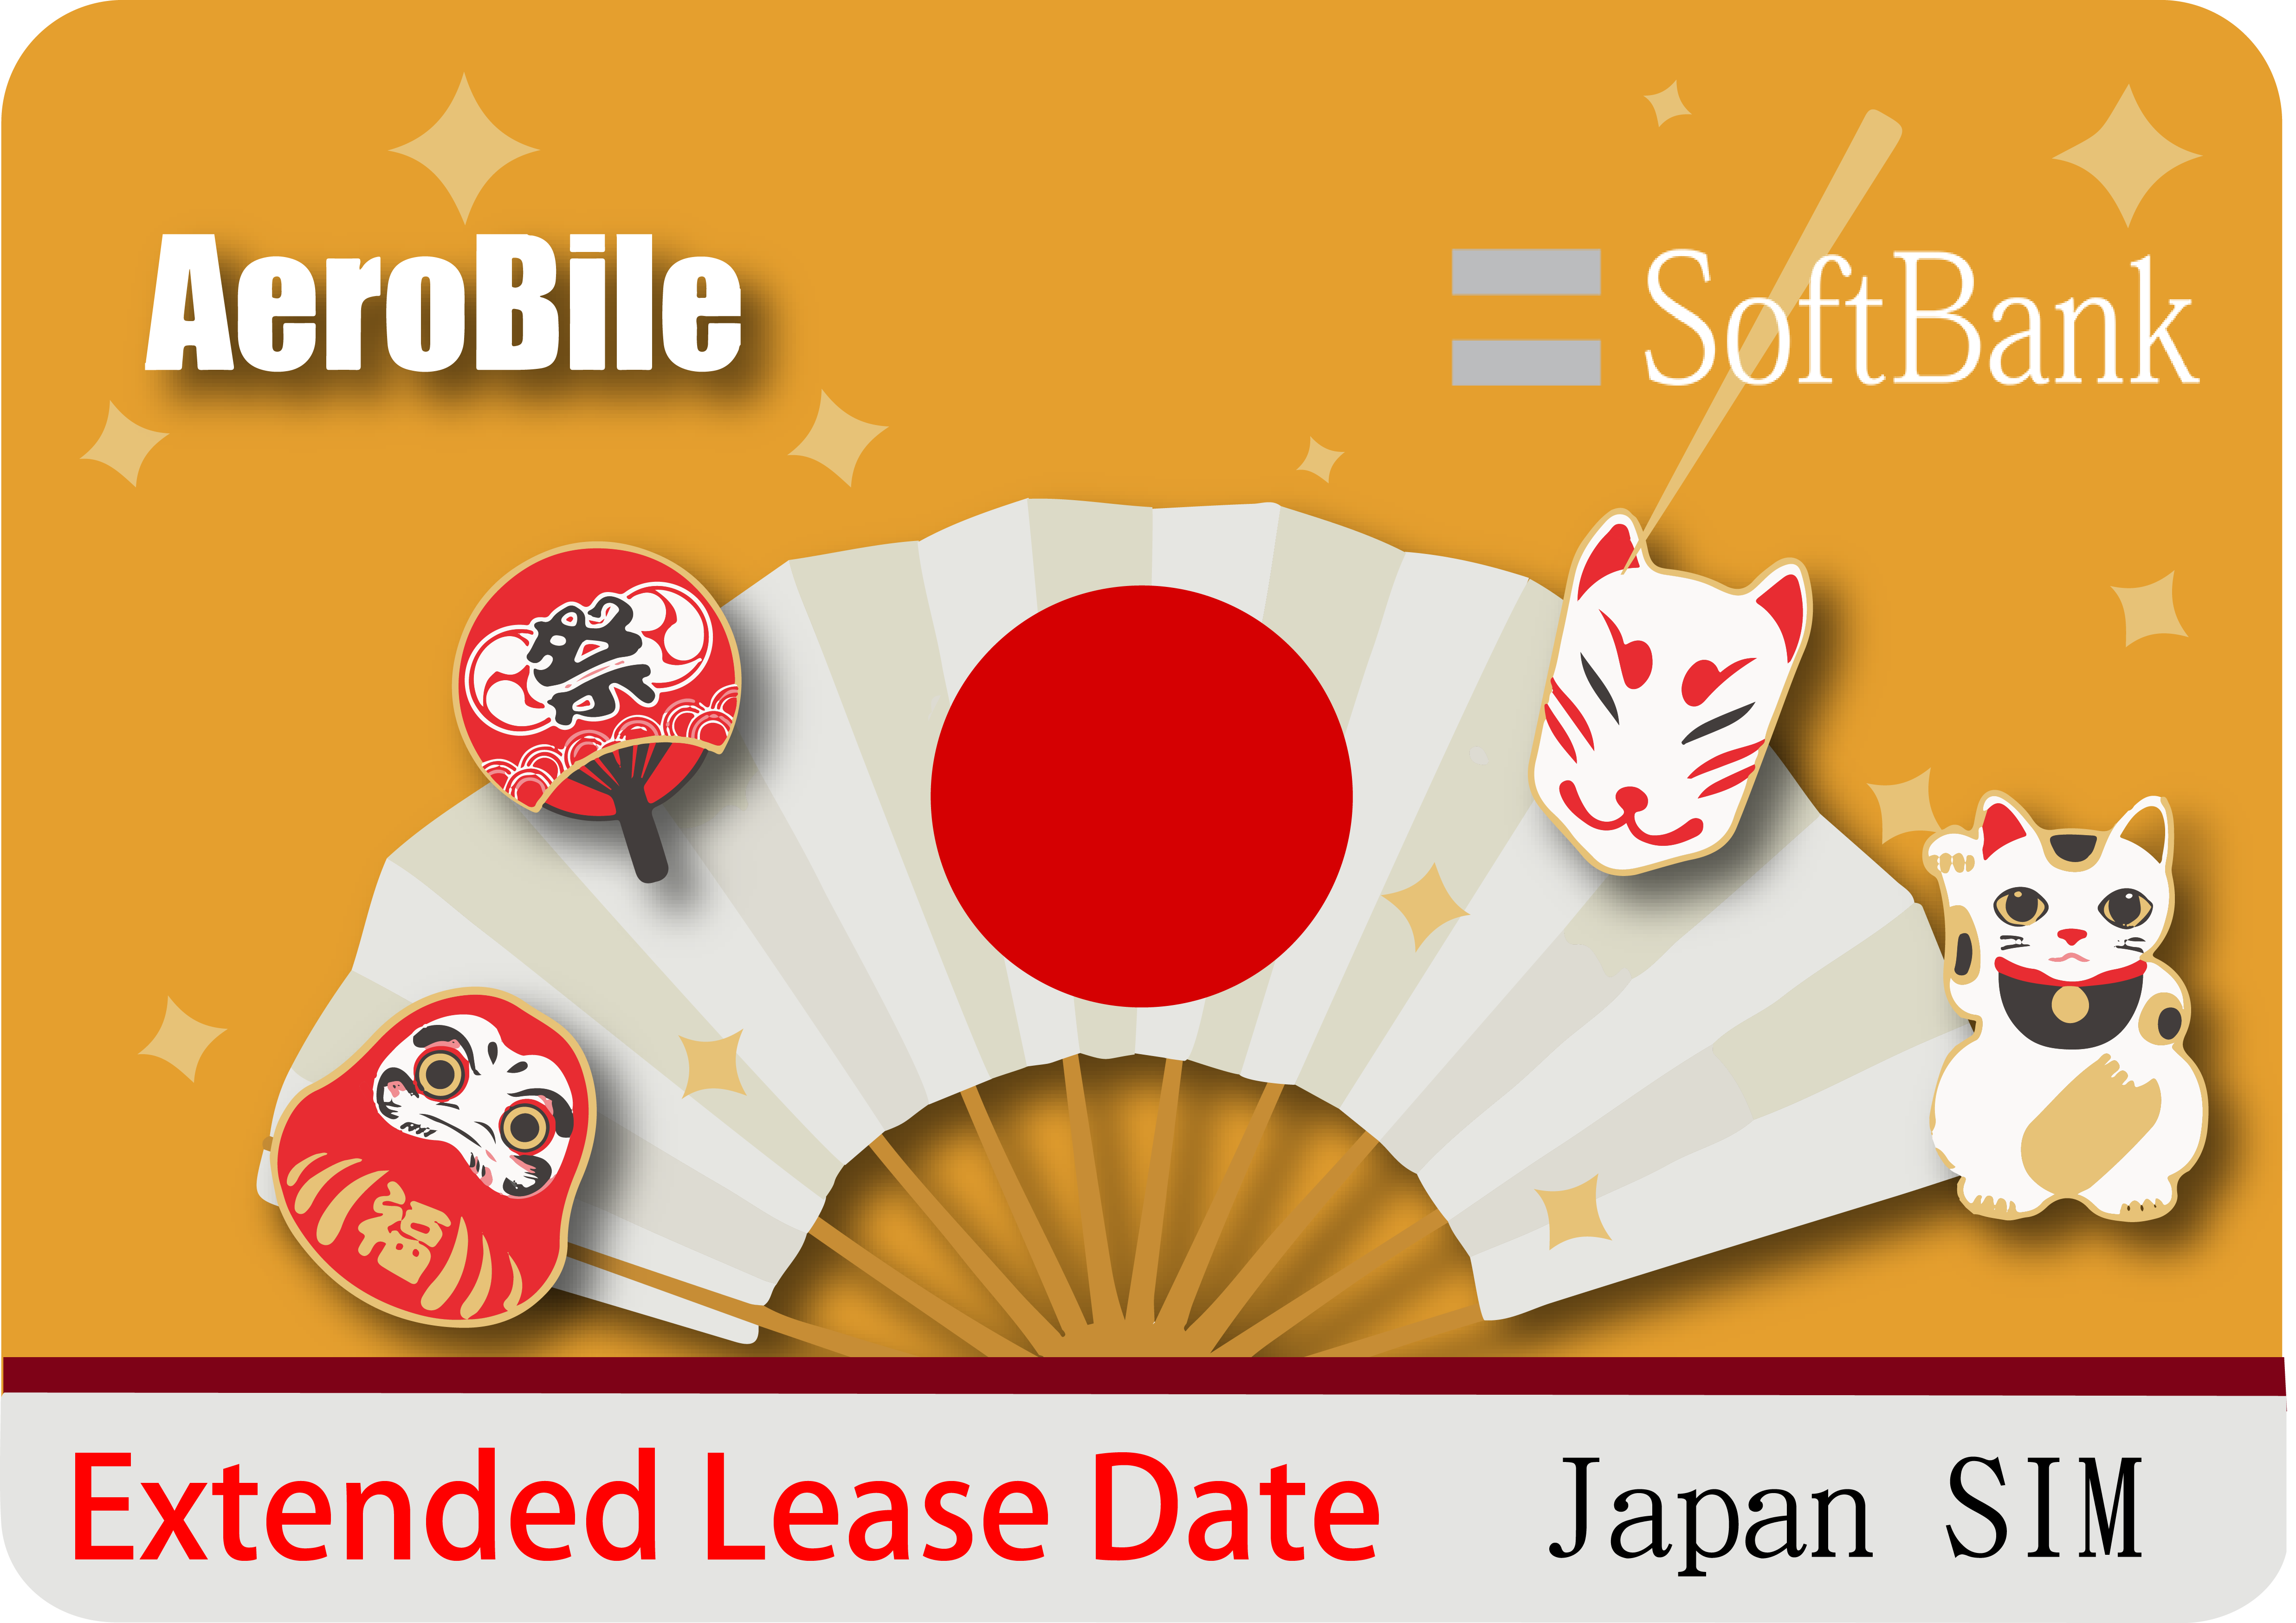 Softbank renewal lease in Japan